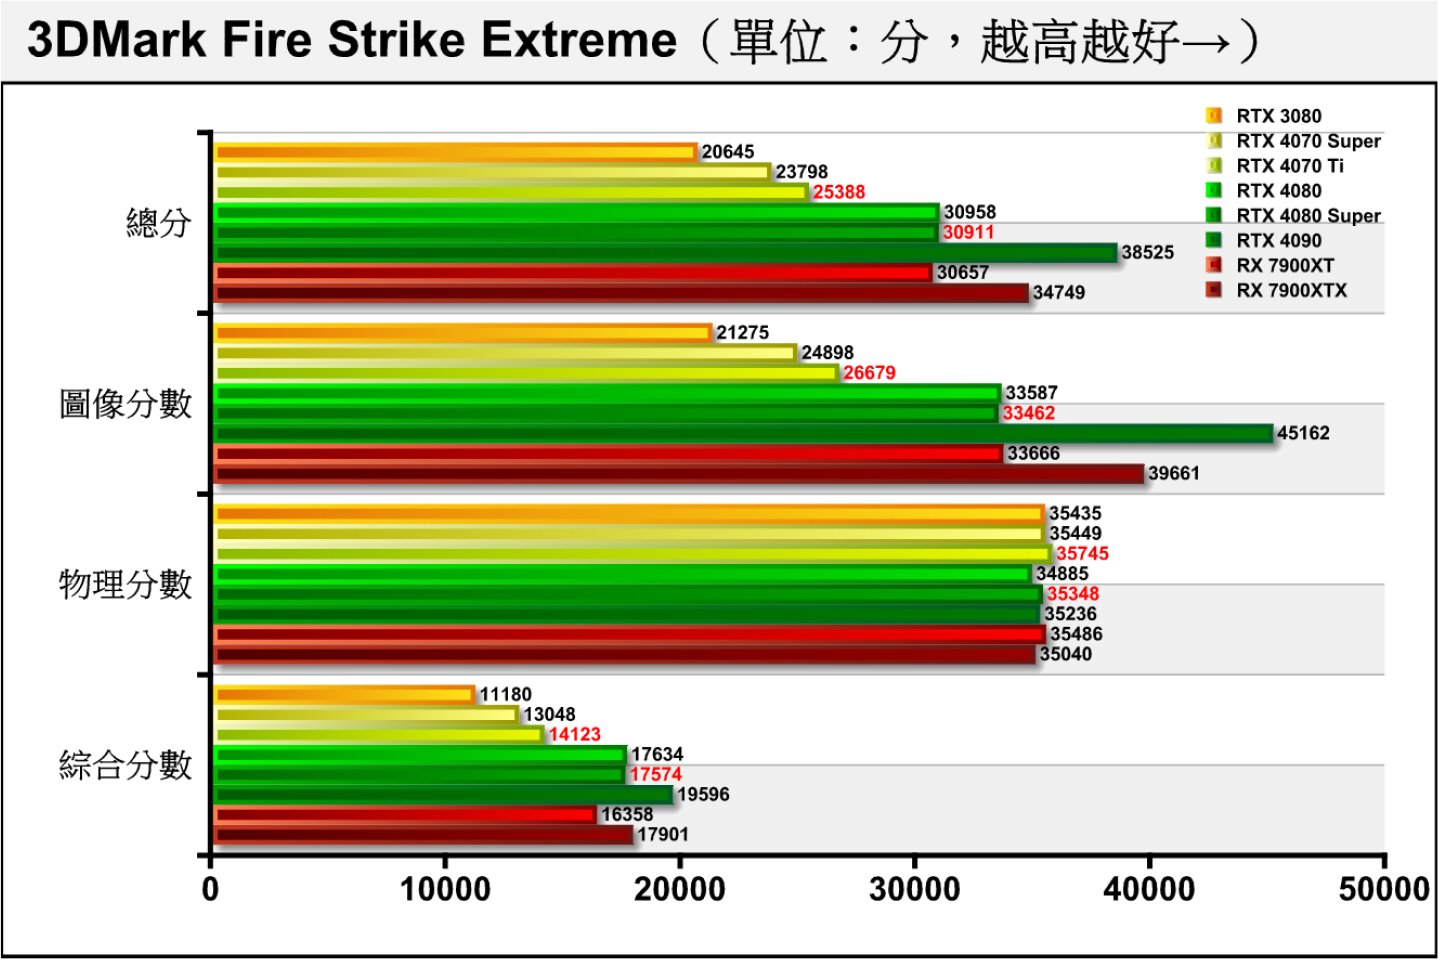 Fire Strike Extreme將解析度提升至2K（2560 x 1440），RTX 4080 Super的圖像分數還是些微落後RTX 4080。